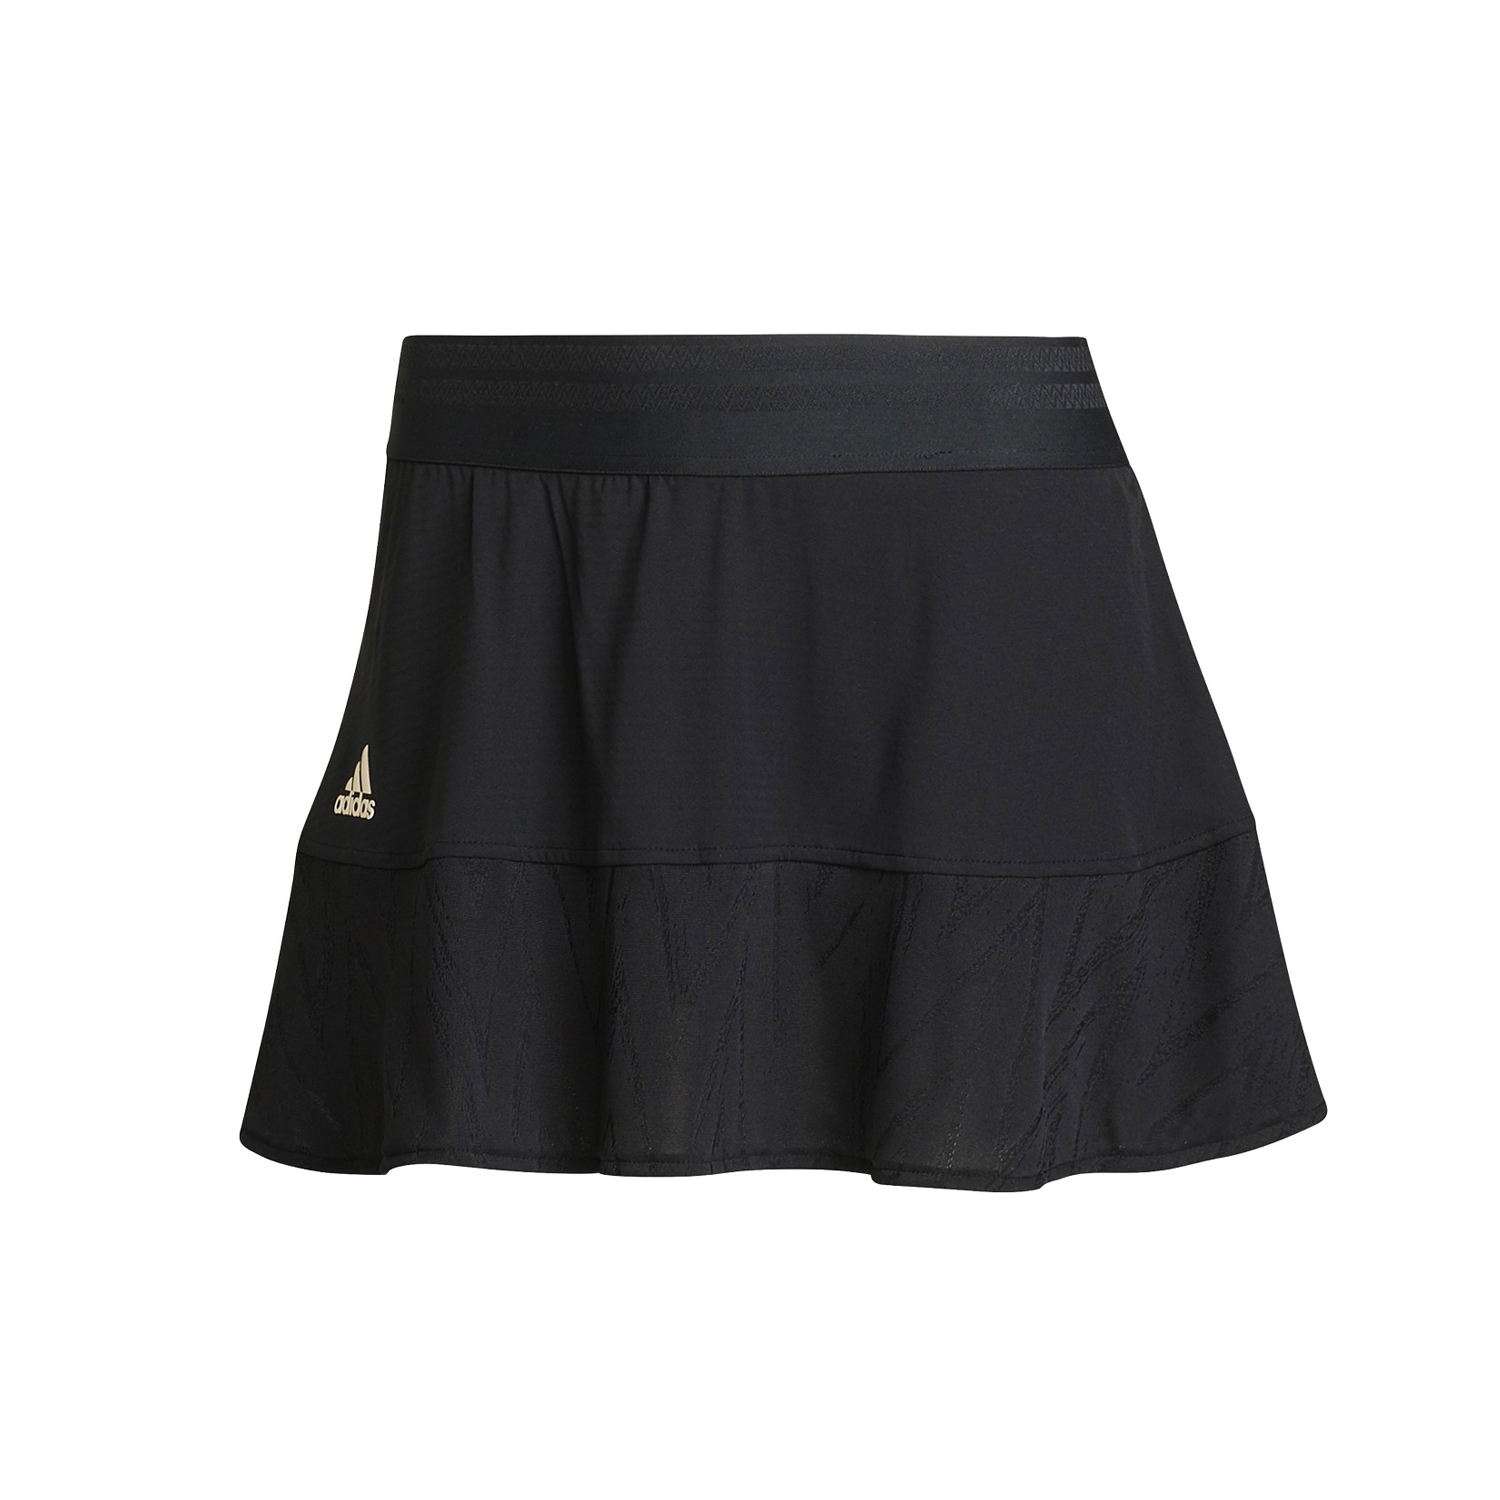 Match Skirt PB Black